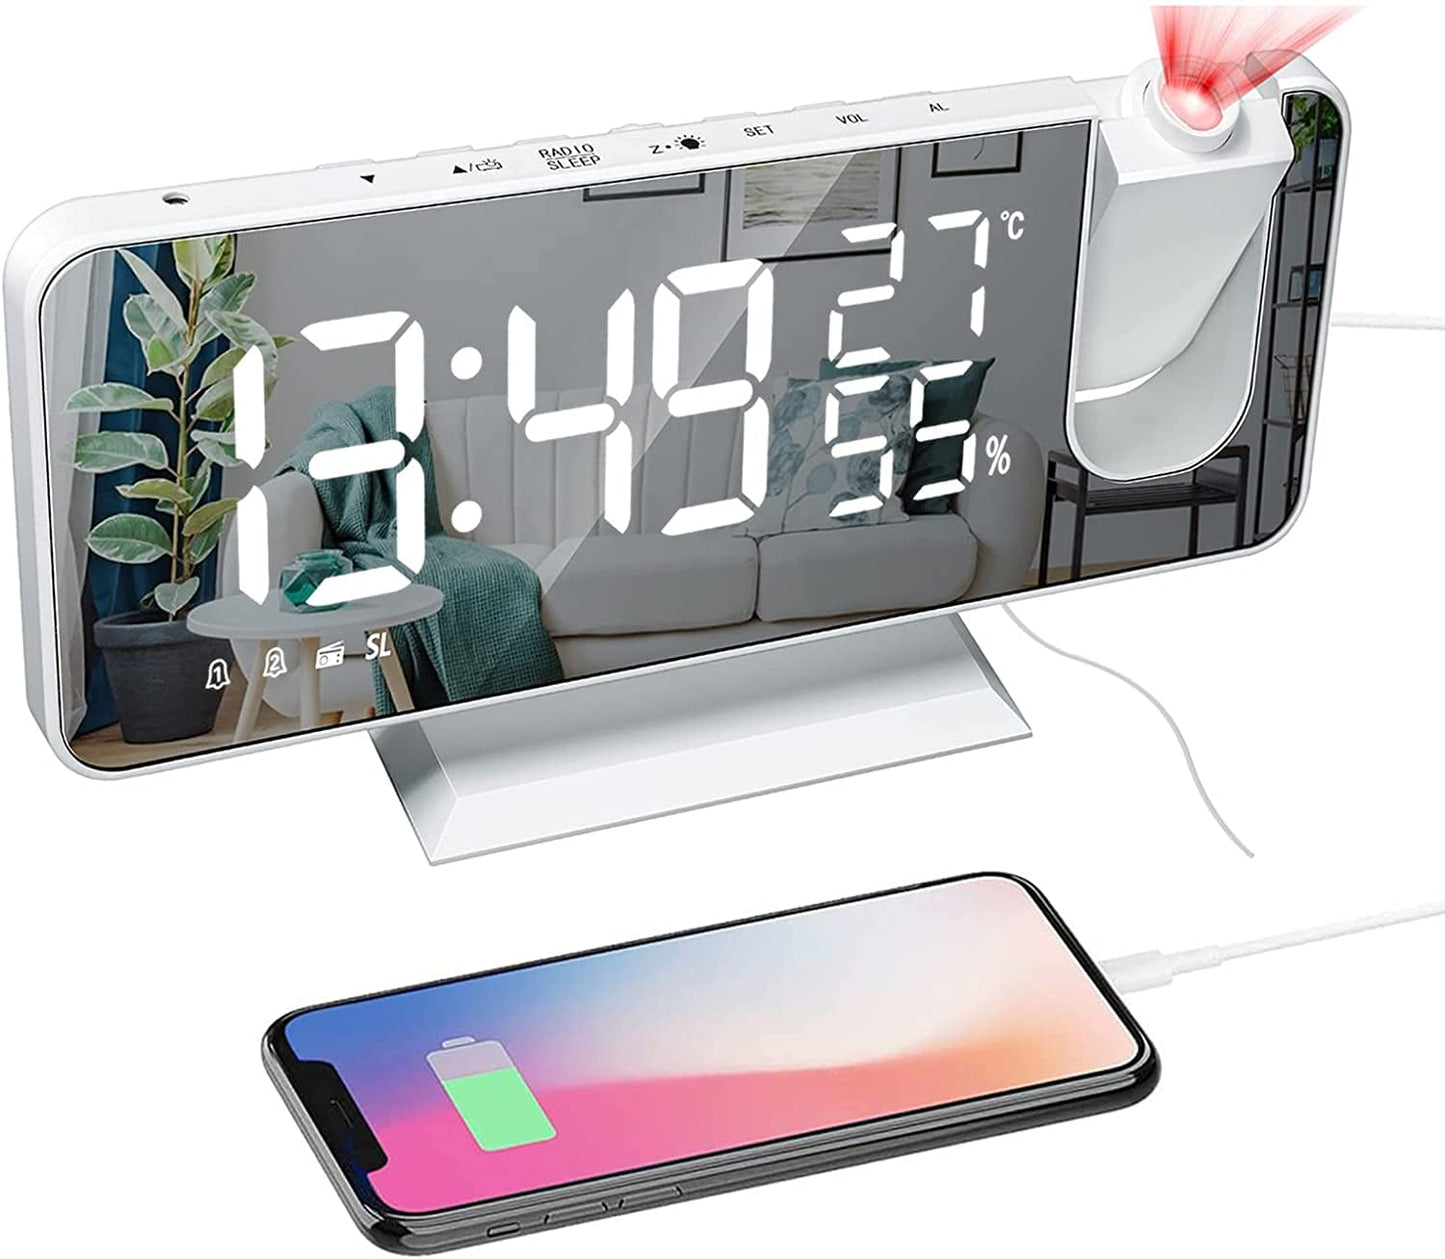 Beam Time - Projector Alarm Clock